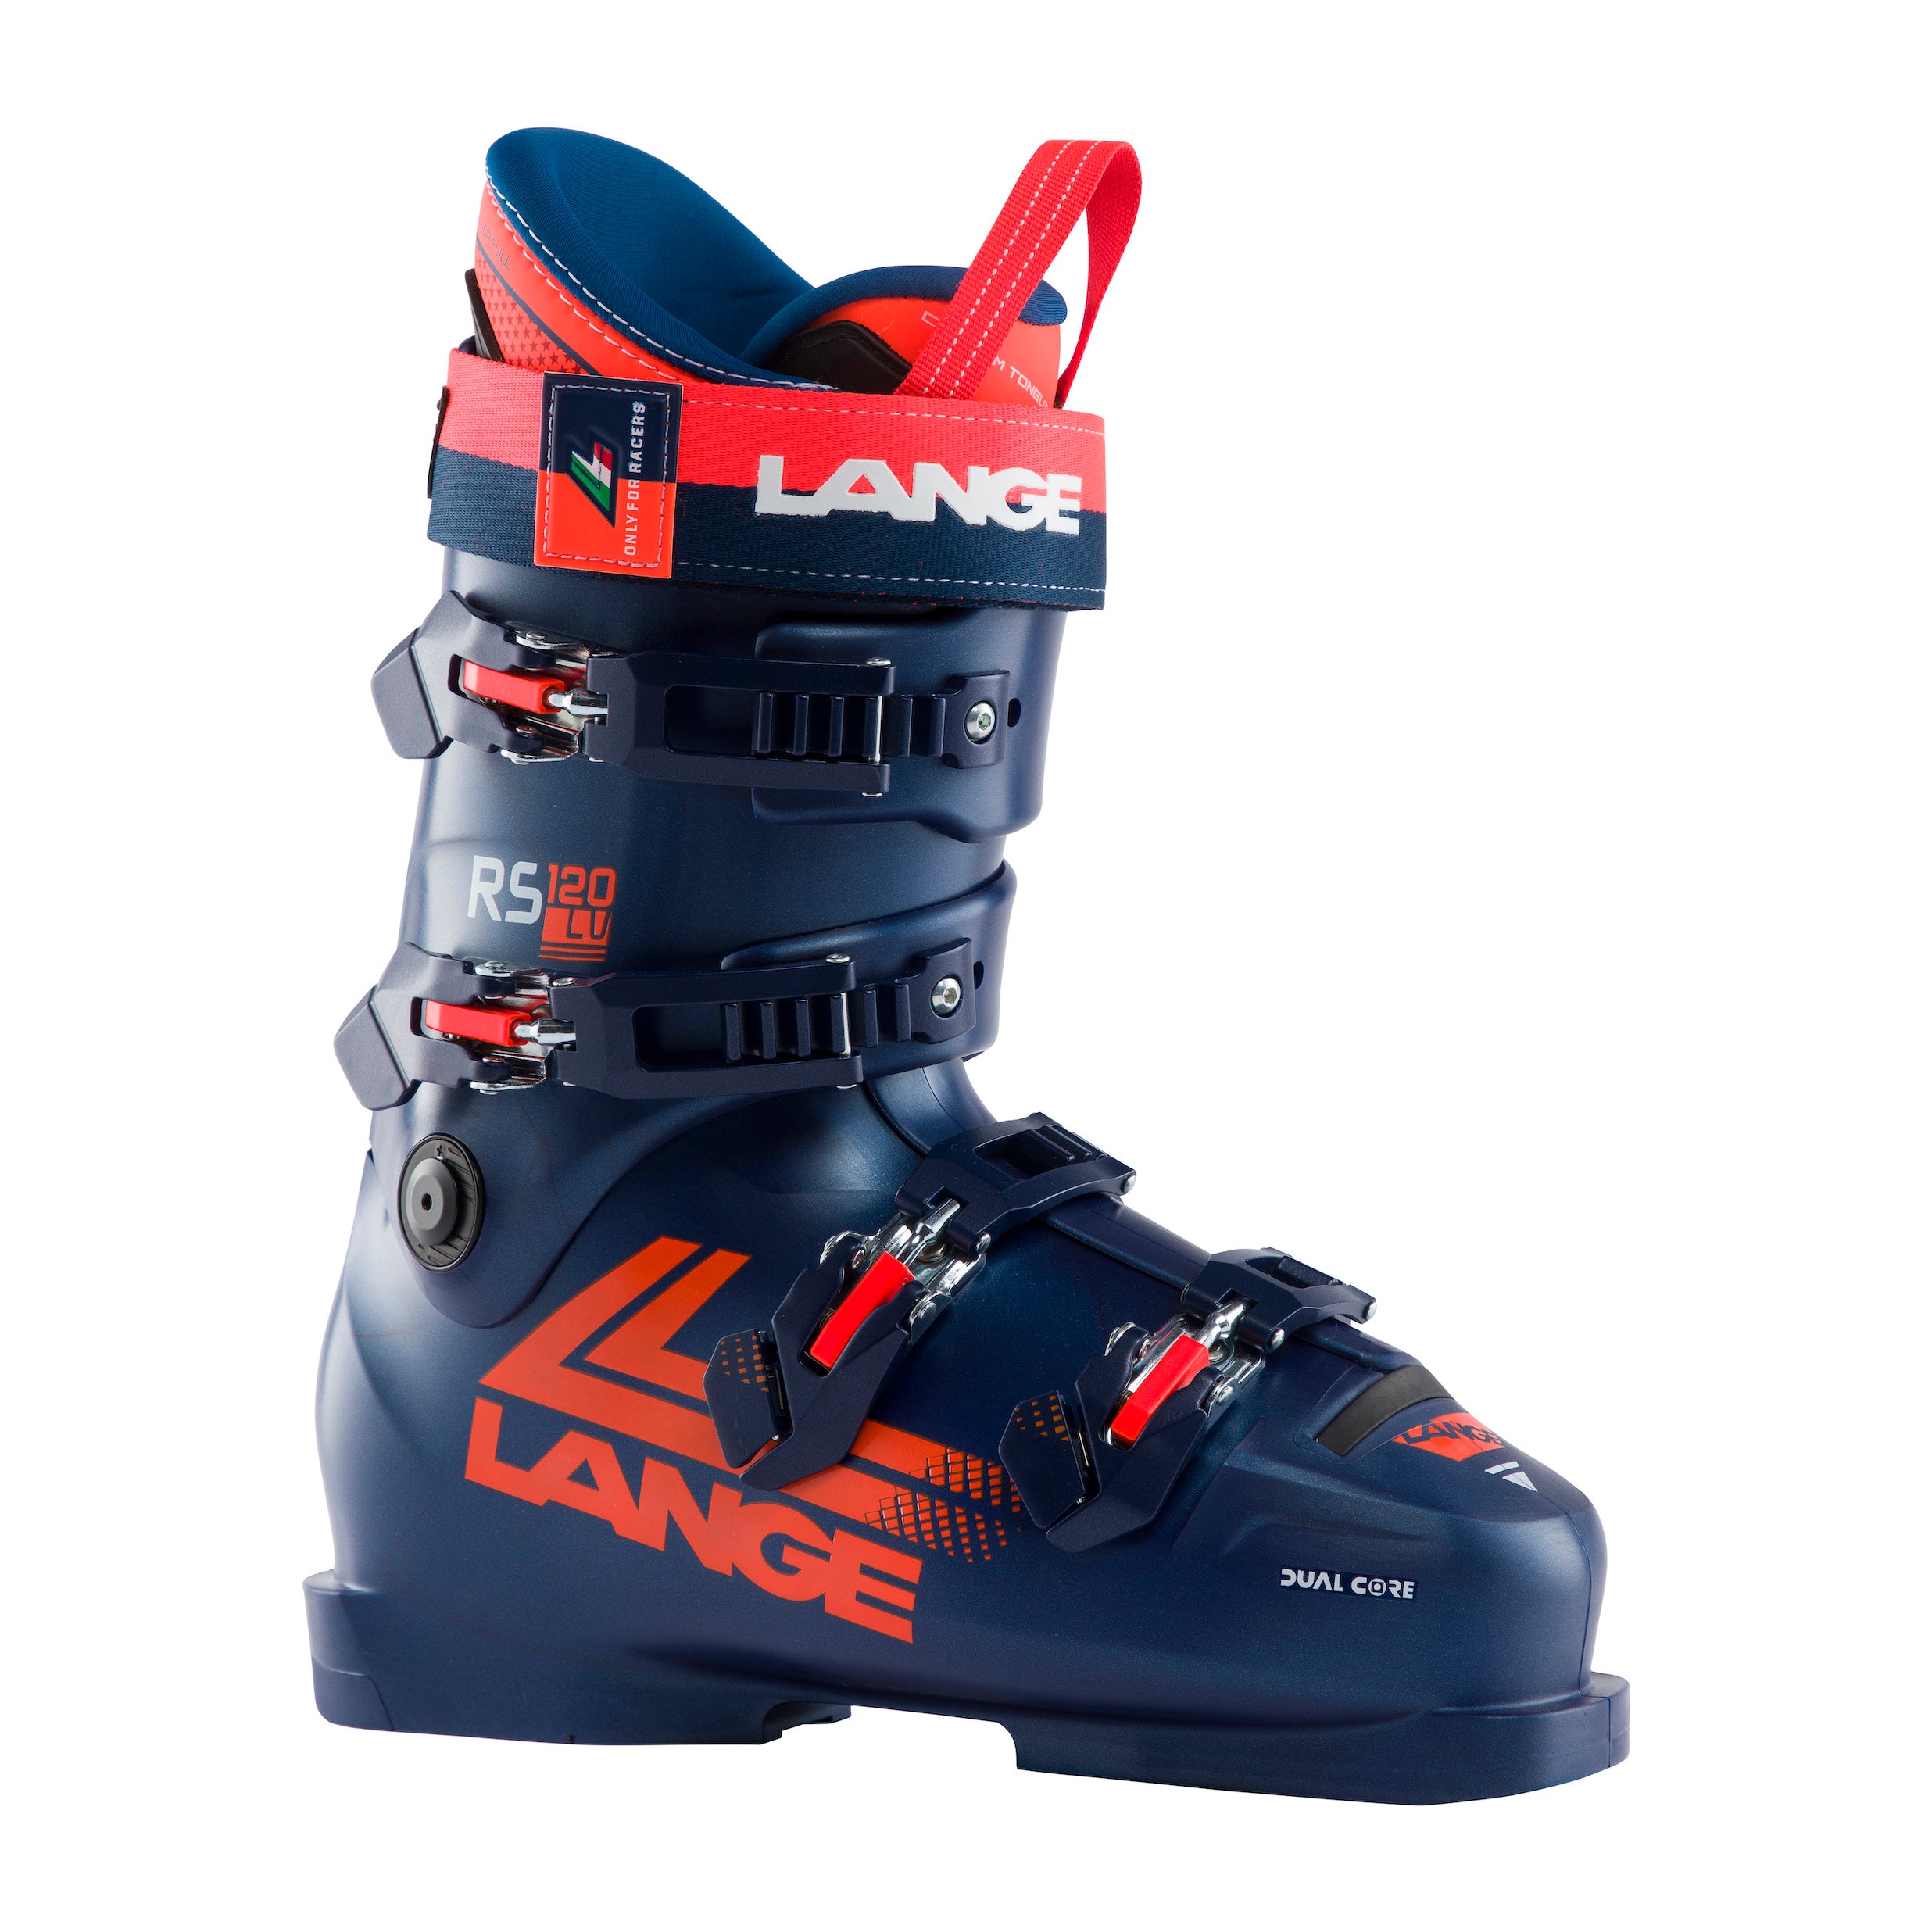 Men's Lange RS 120 LV ski boot dark blue with neon orange accents.